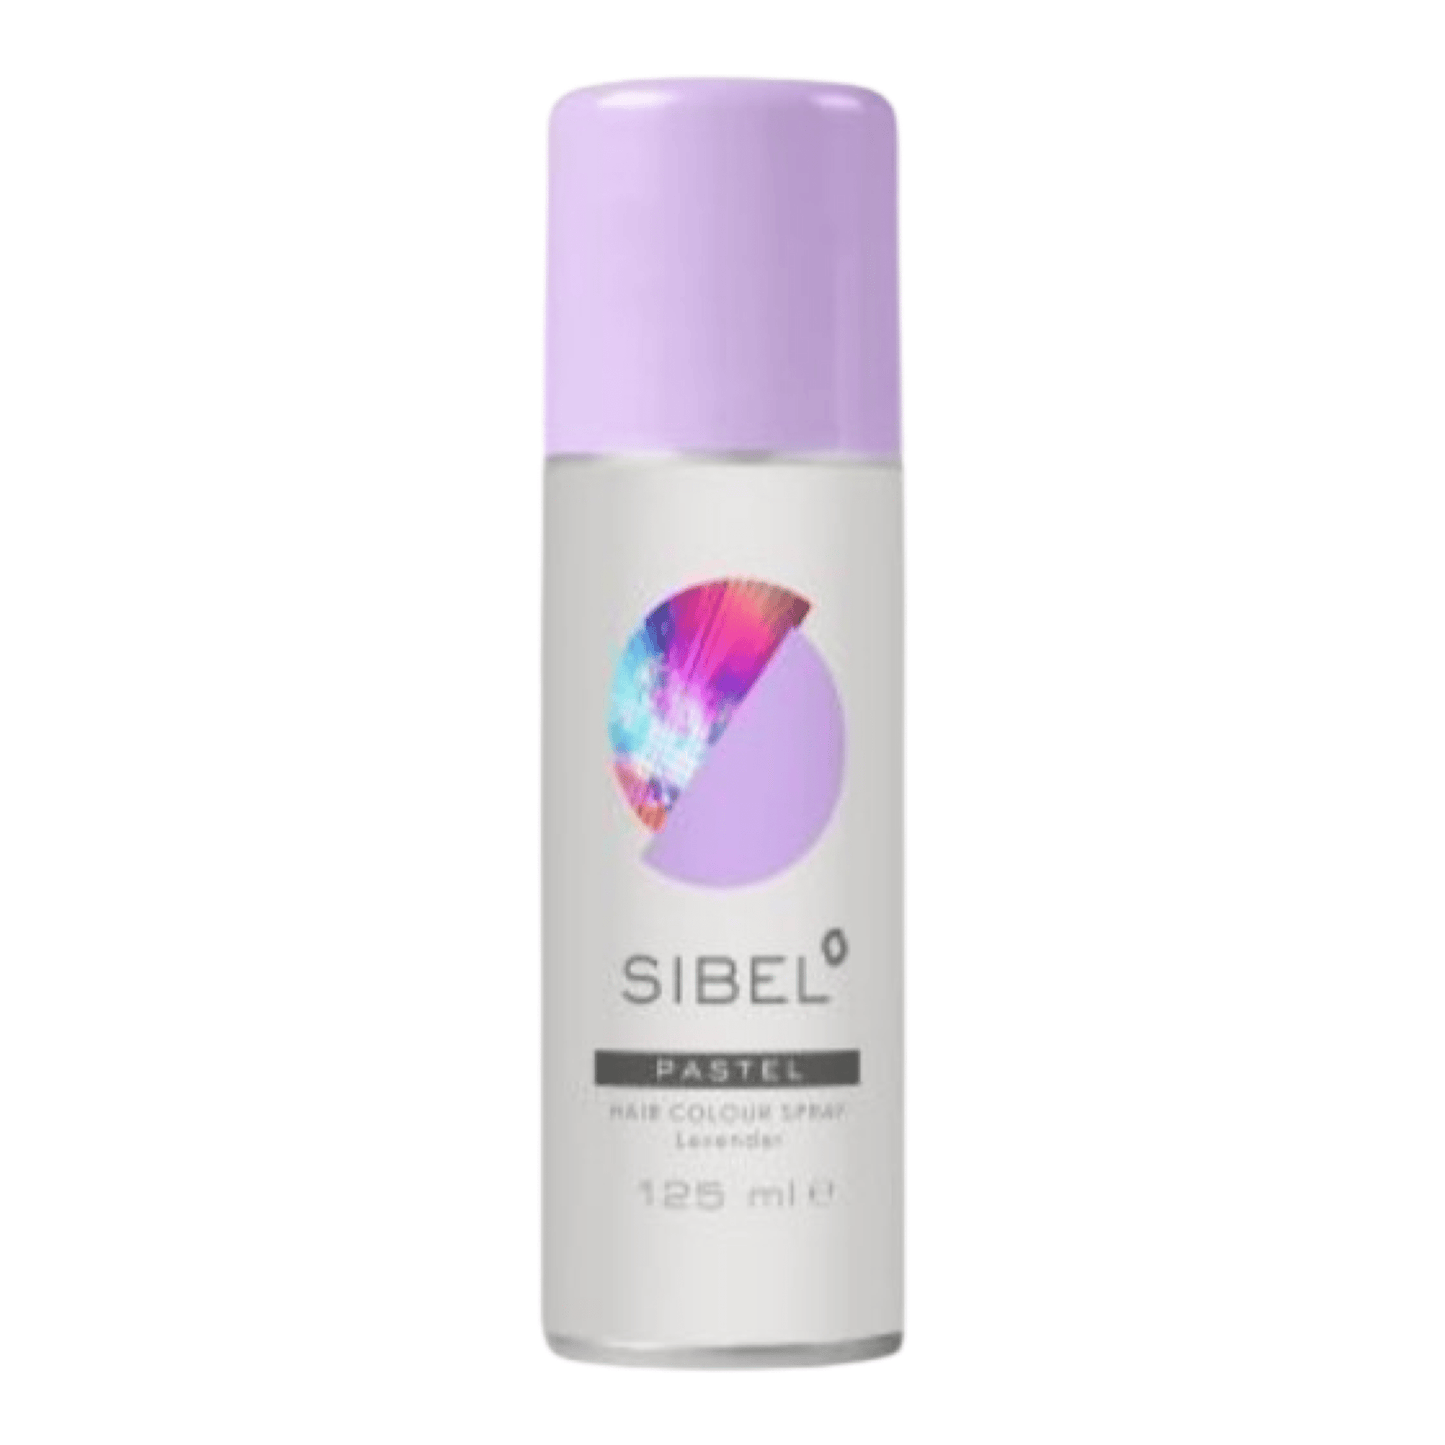 Sibel - Color spray pastel Lavender 125 ml - Merle og Wilde